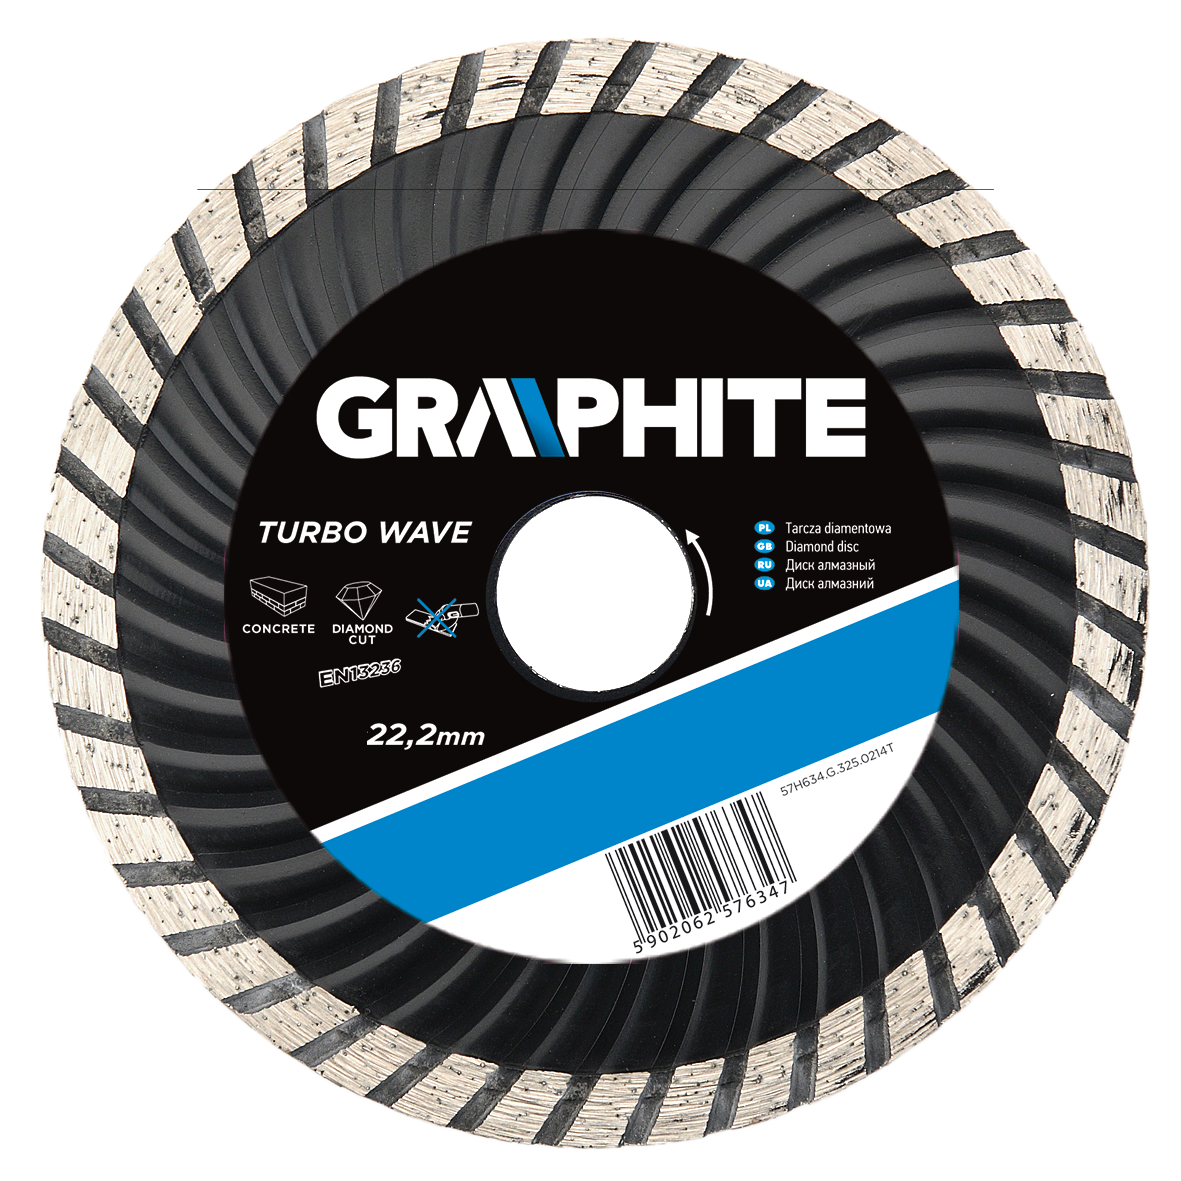 Graphite Tarcza diamentowa 125x22,2 mm turbo wave (57H634)